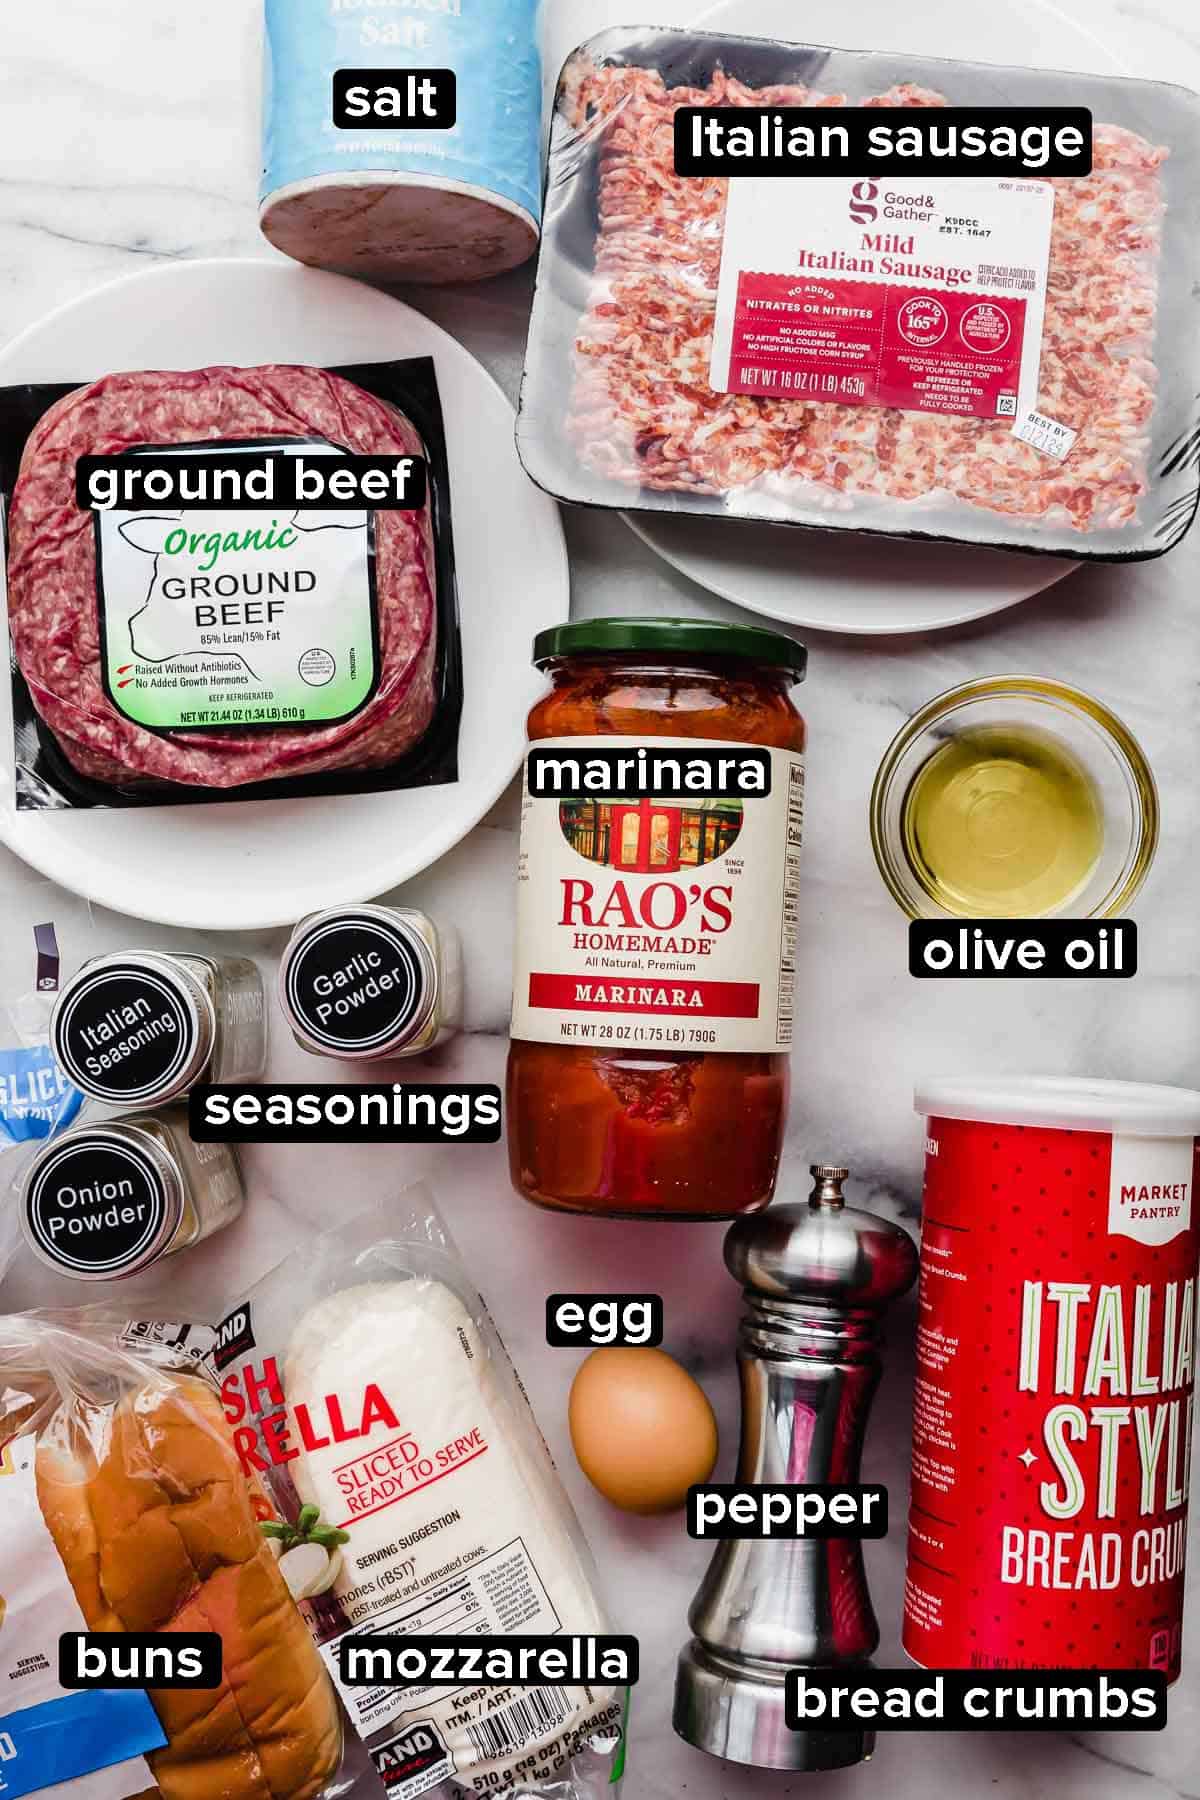 Italian Meatball Subs ingredients on a white background: ground beef, Italian sausage, marinara, bread crumbs, seasonings, egg, and mozzarella.